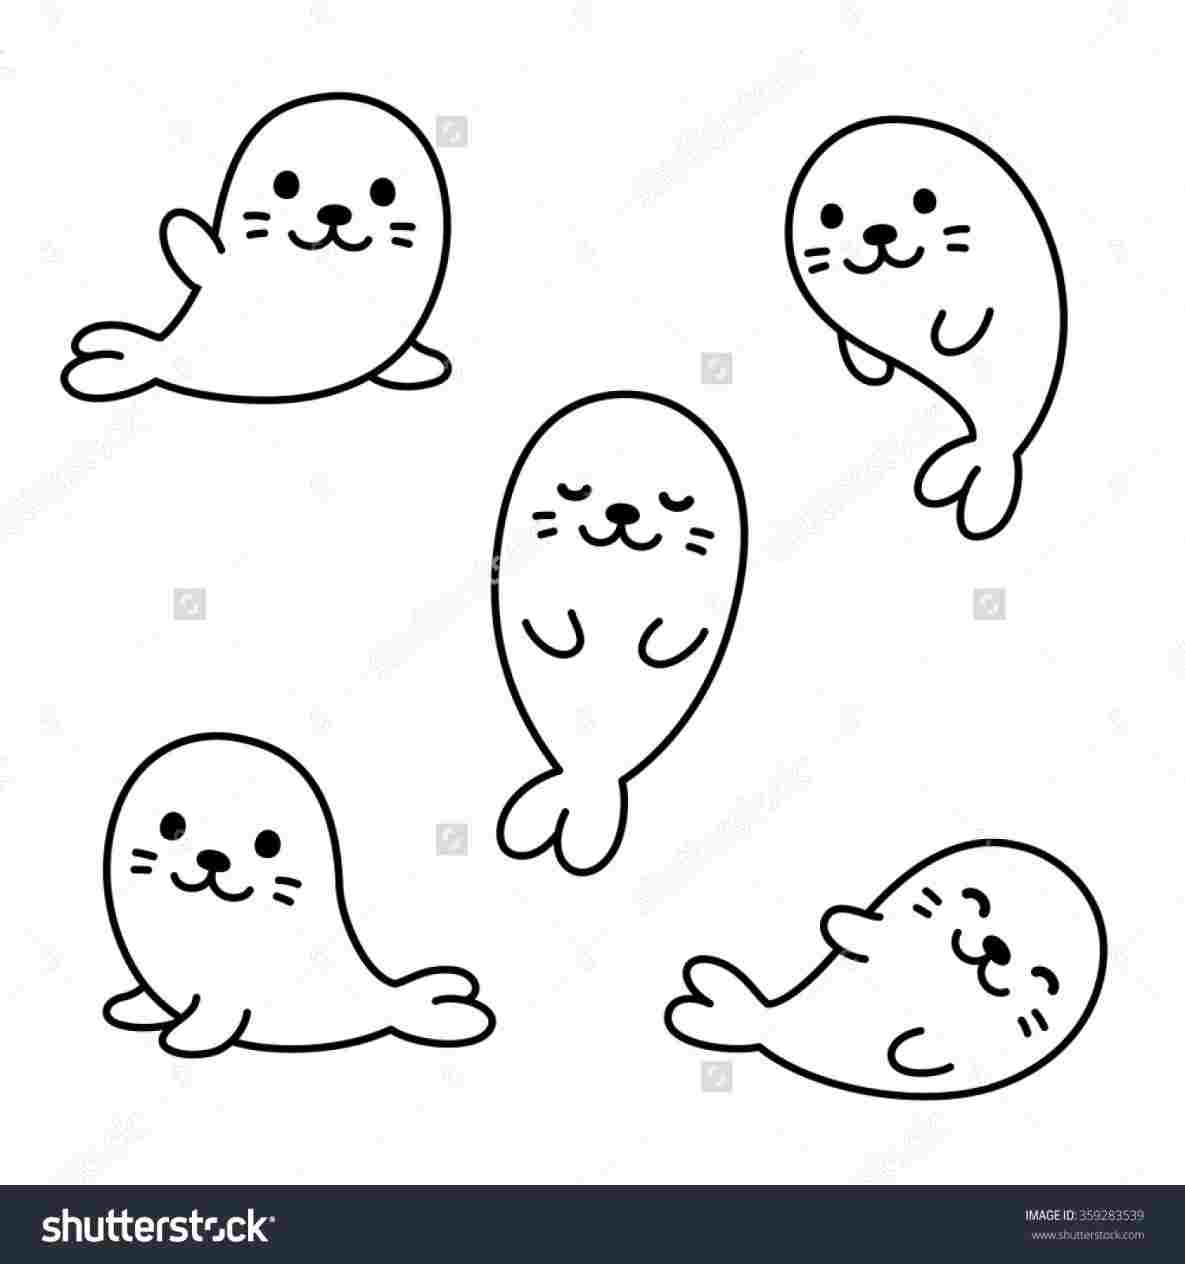 seal clipart easy cartoon